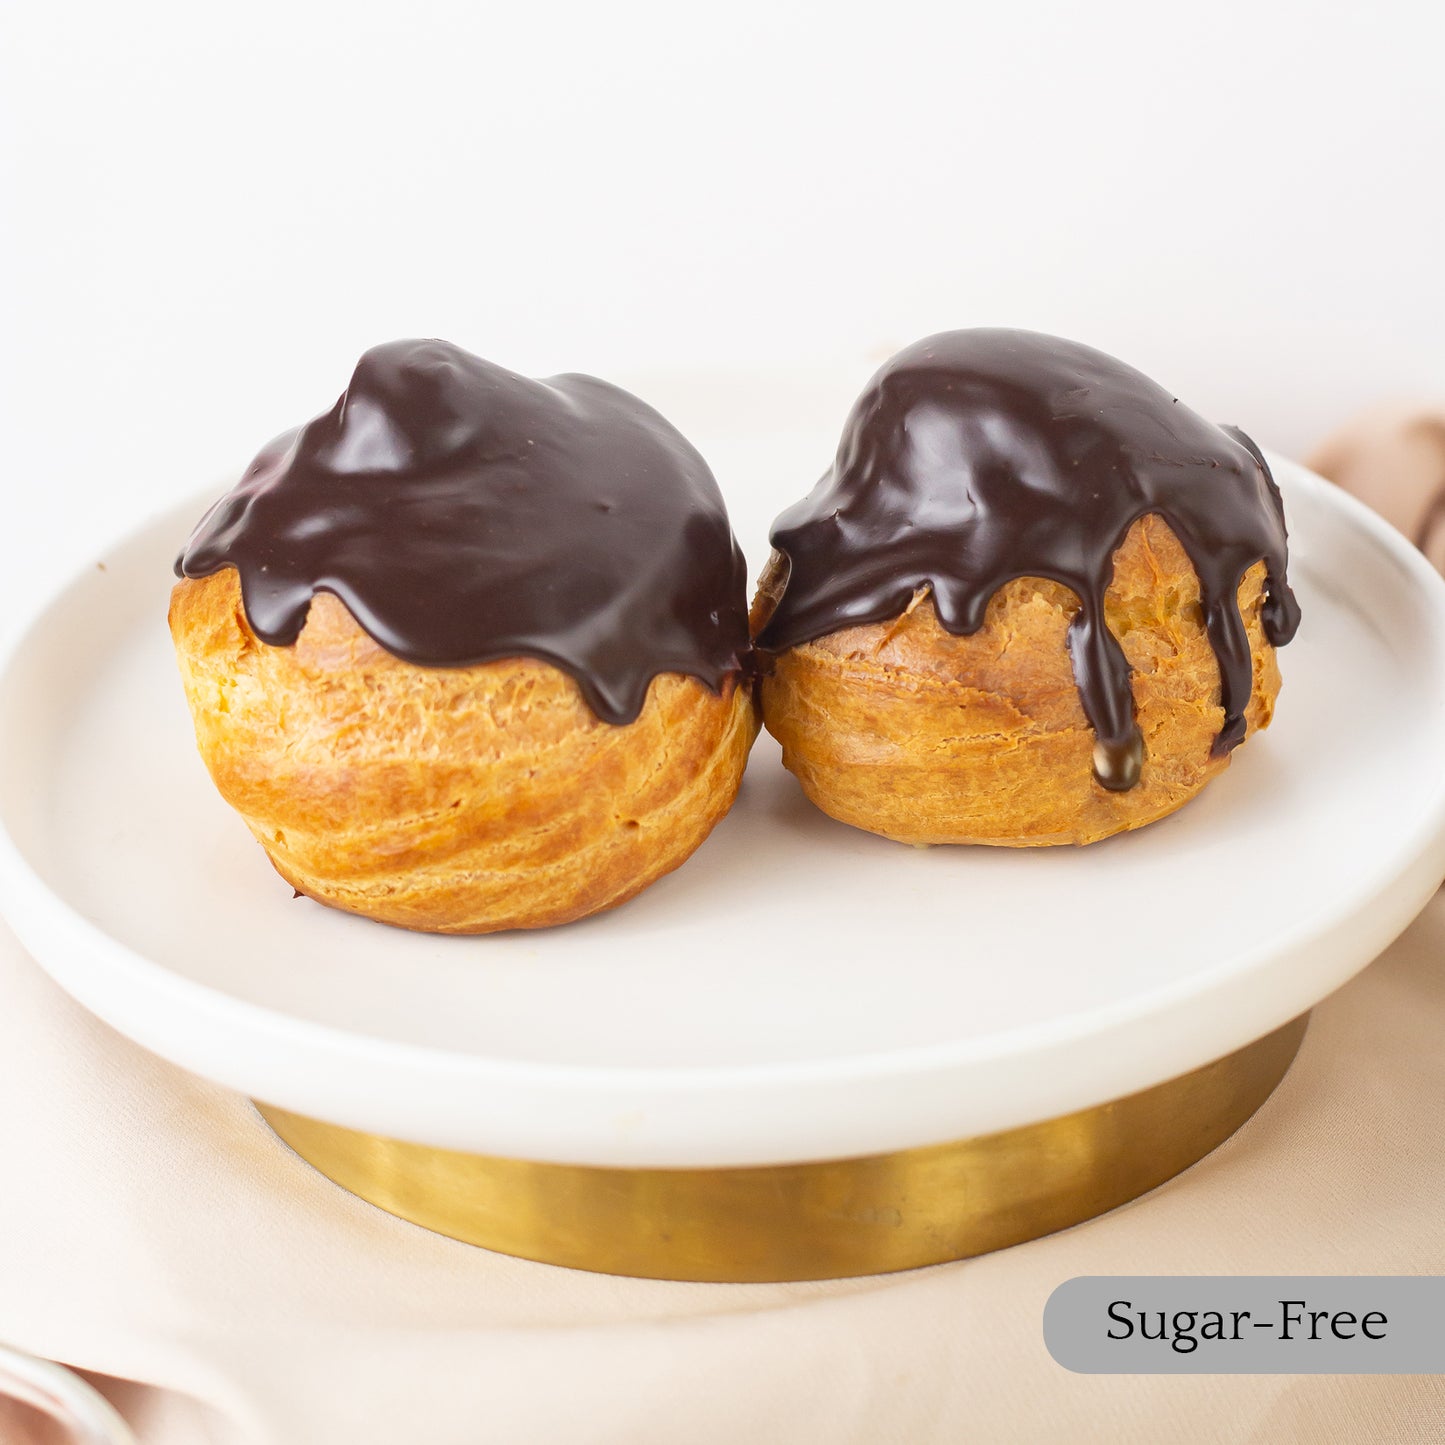 cream puff | sugar free cream puff | dessert | sugar free pastry | the sugar free bakery